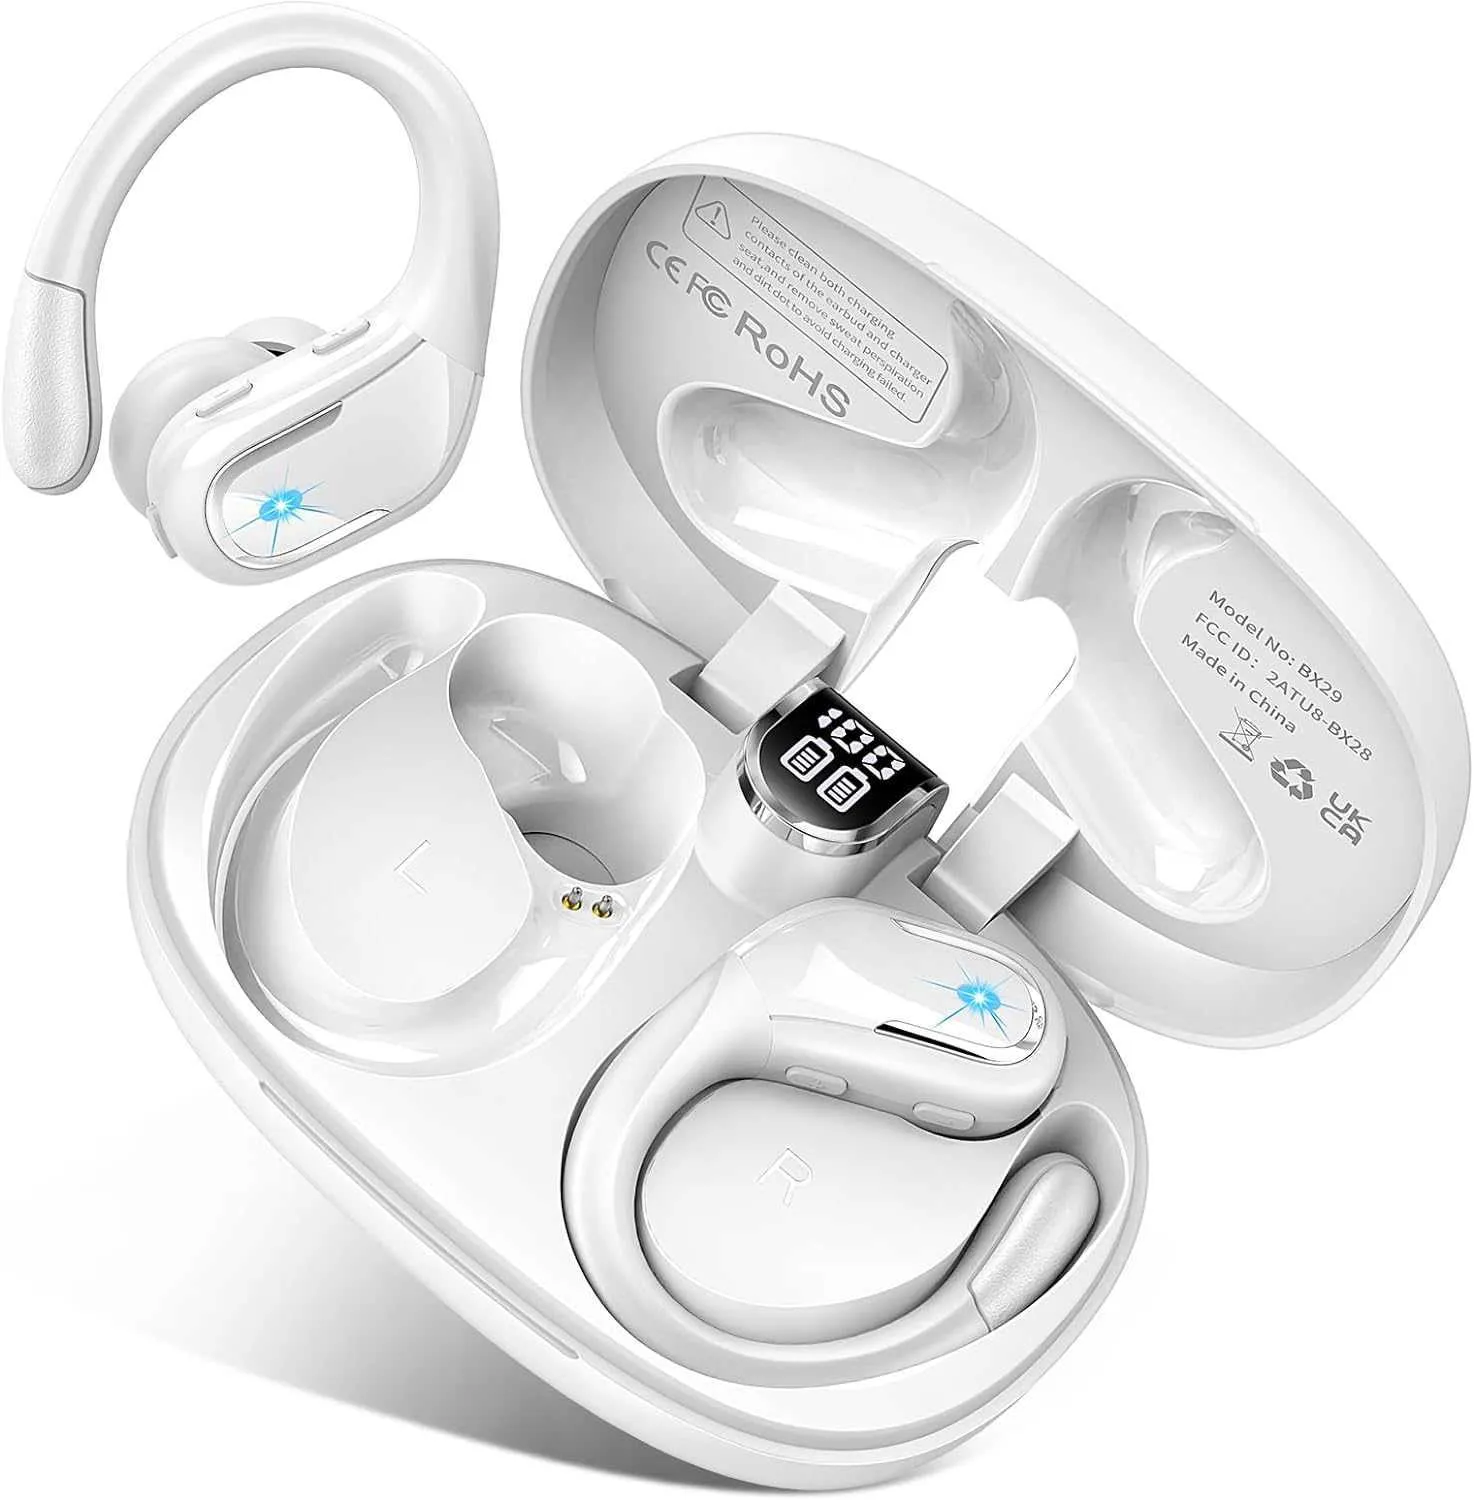 Bluetooth headphones wireless headset noise canceling display screen show power waterproof long life ear hanging headset 30MH4